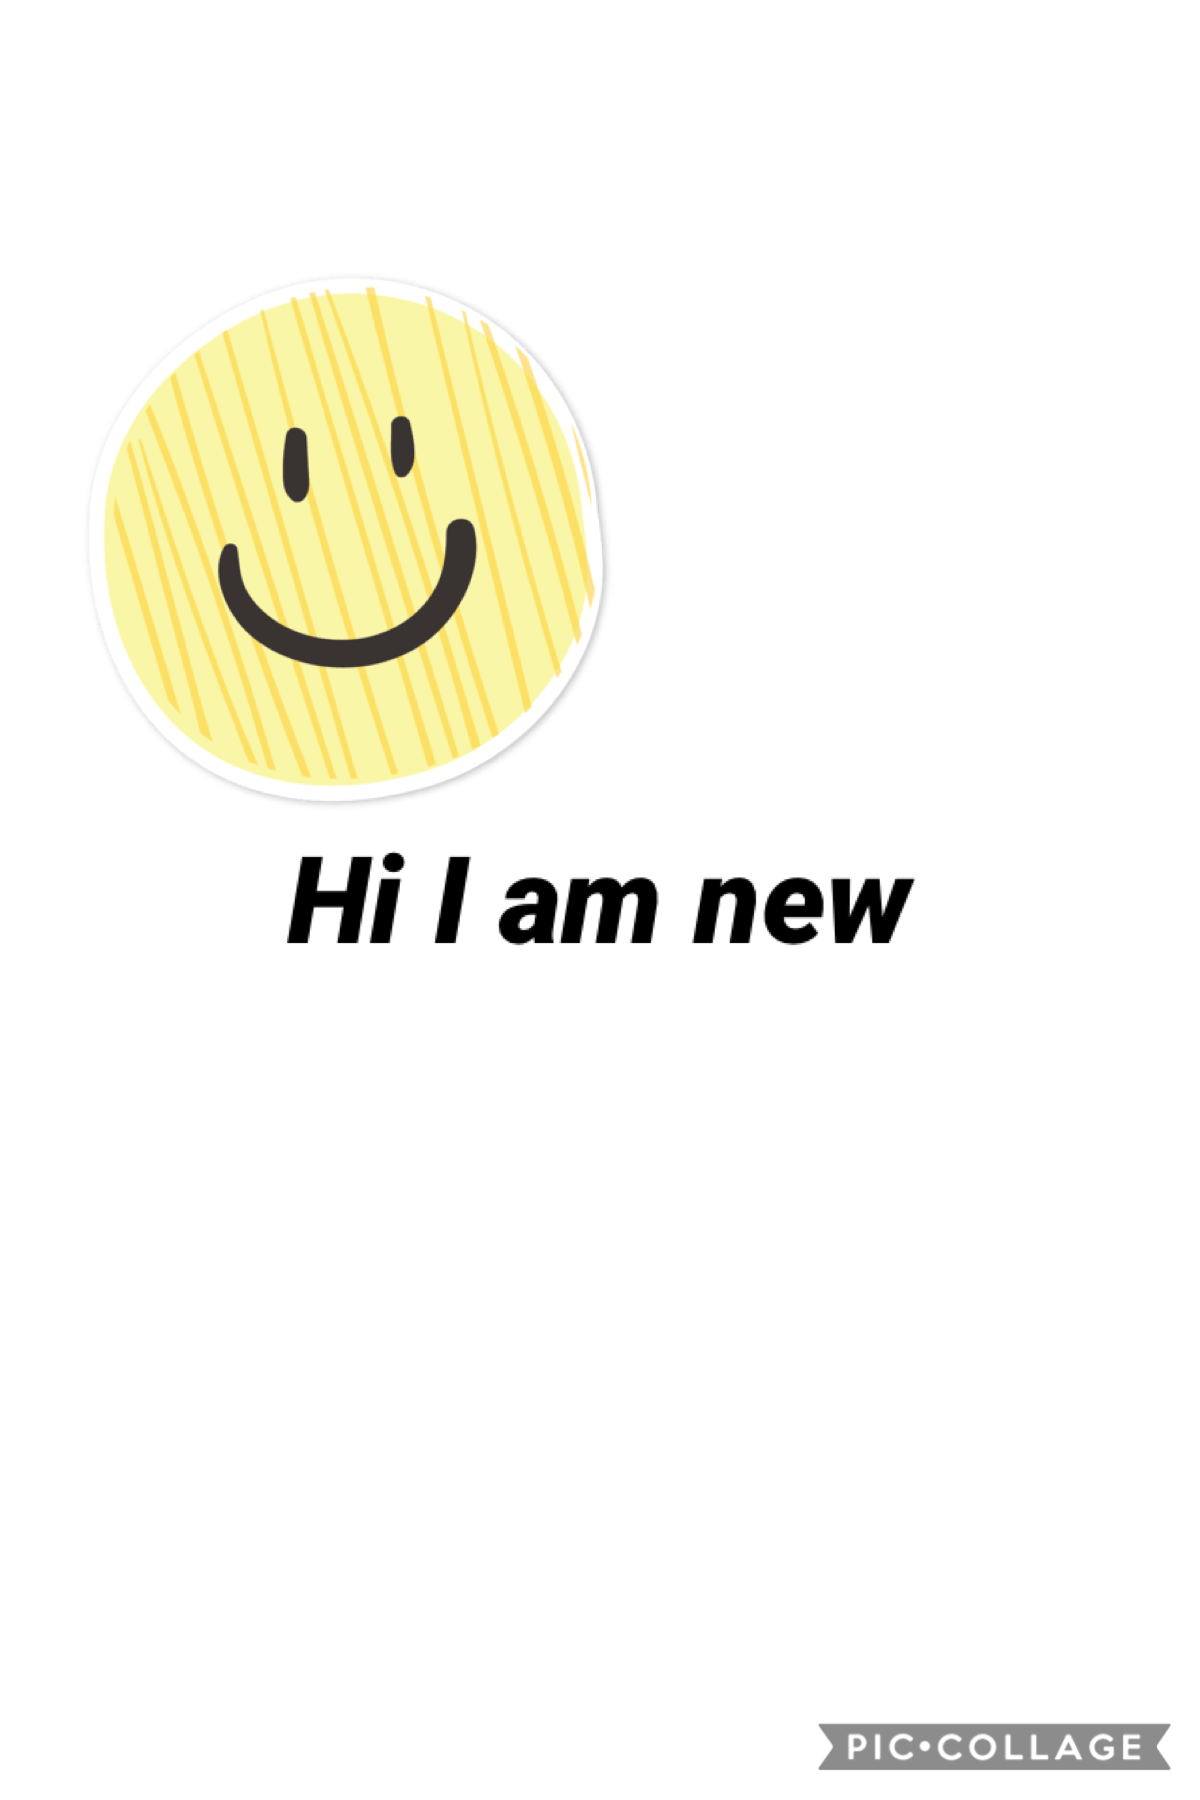 I am new